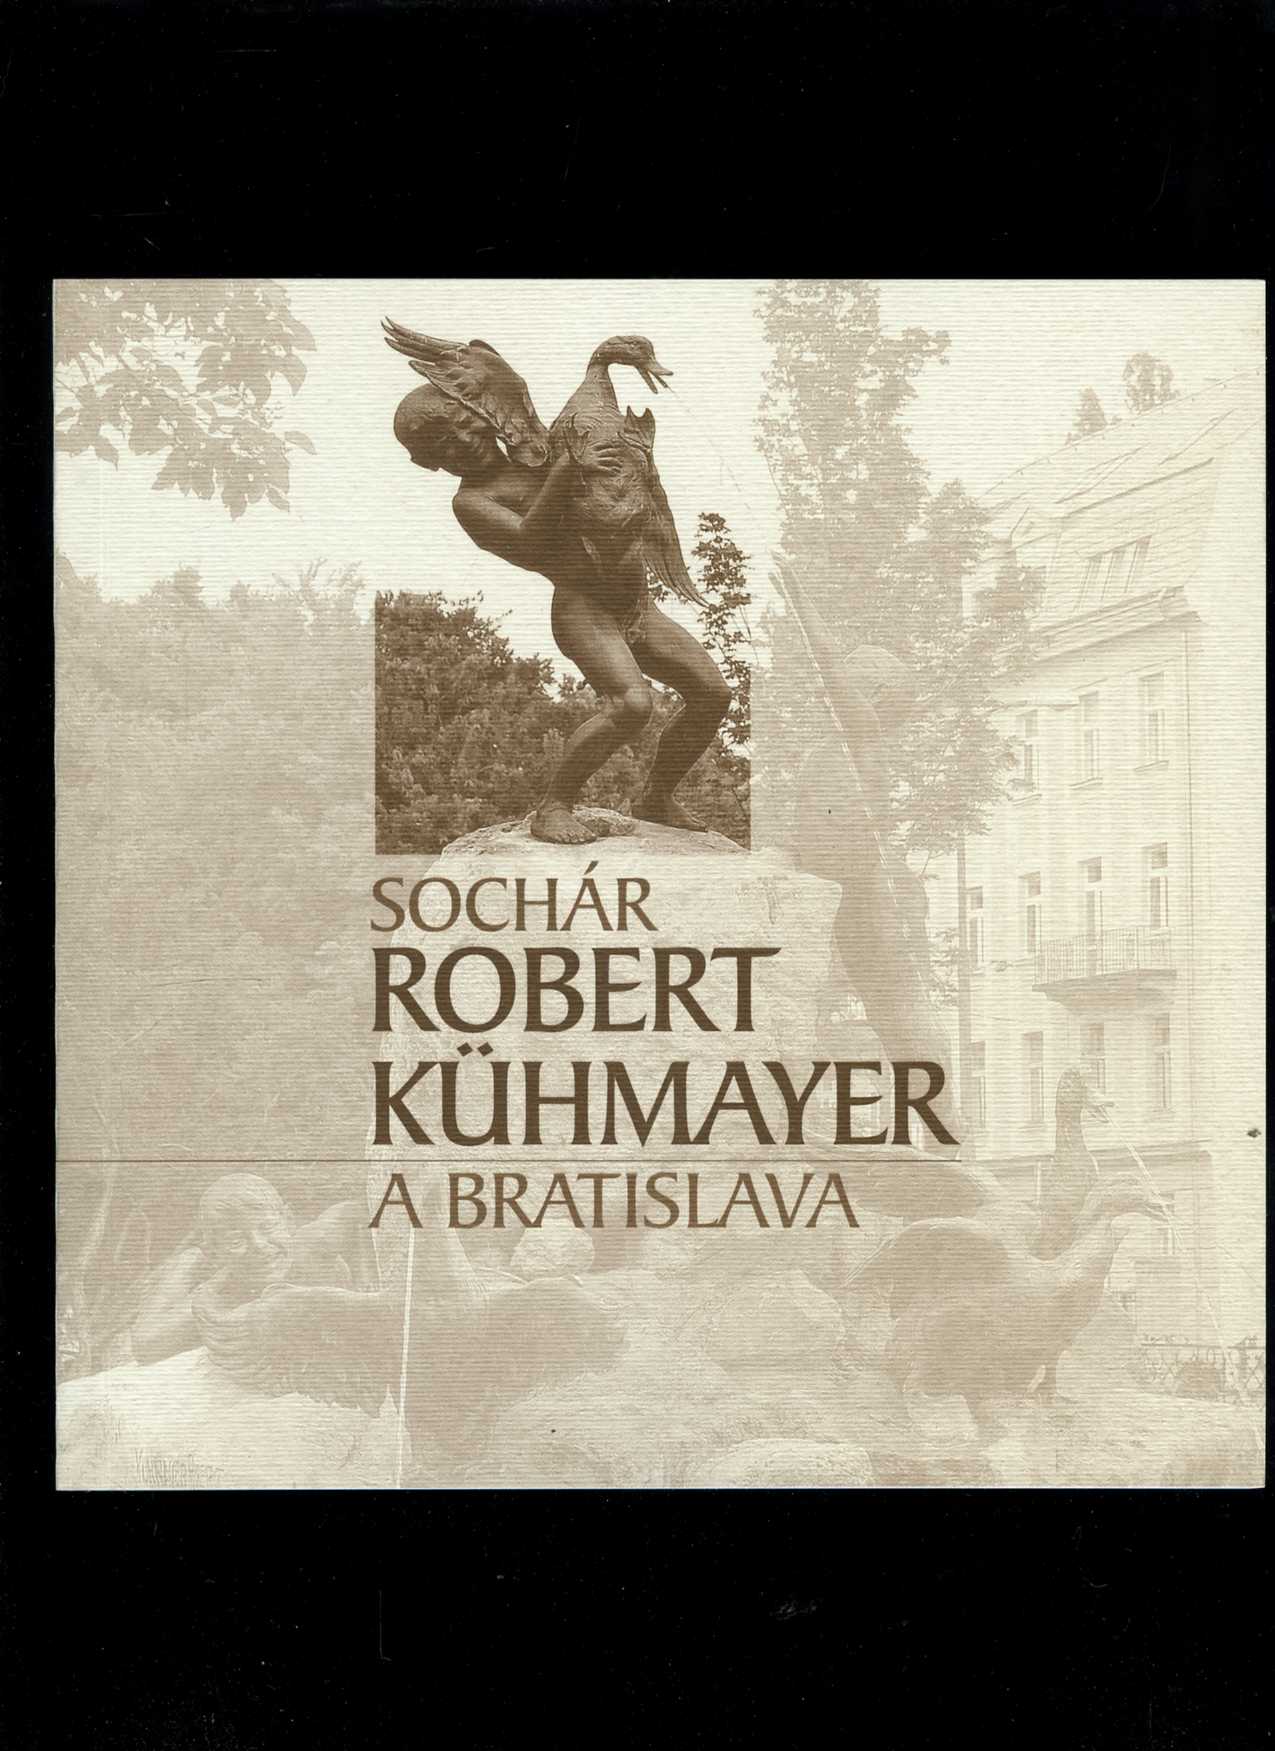 Sochár Robert Kühmayer a Bratislava (Želmíra Grajciarová)